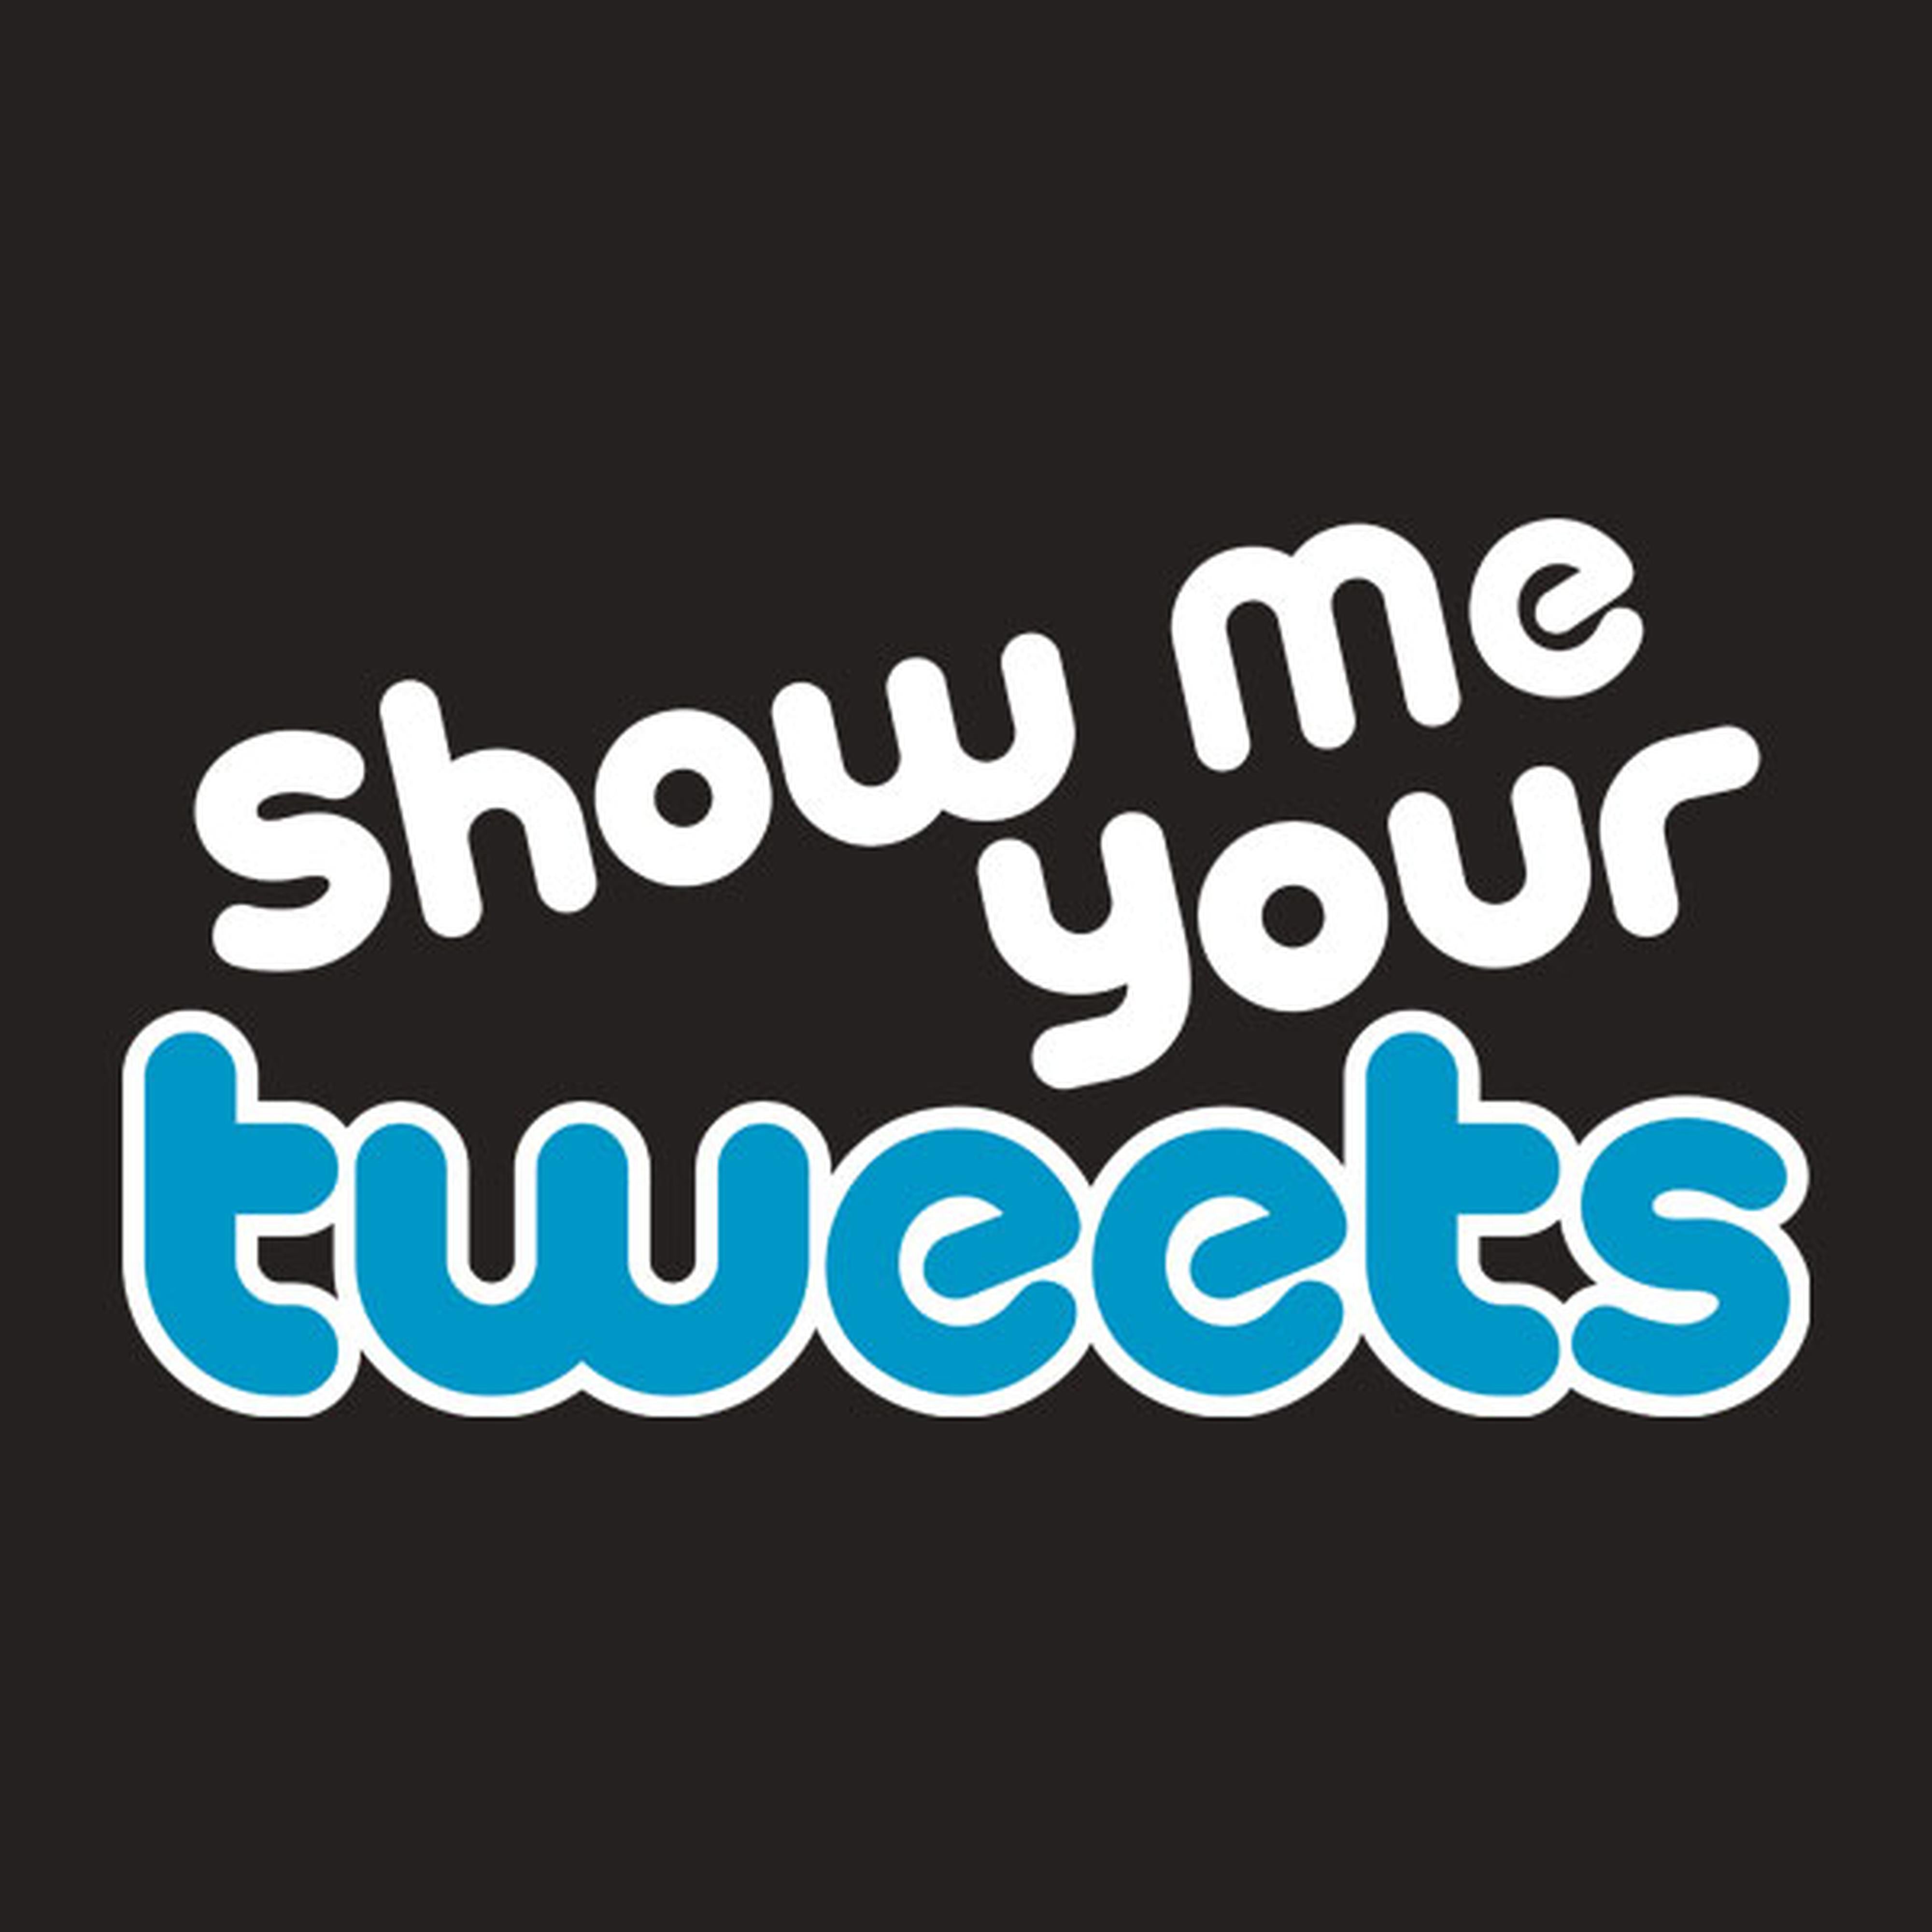 Show me your tweets - T-shirt